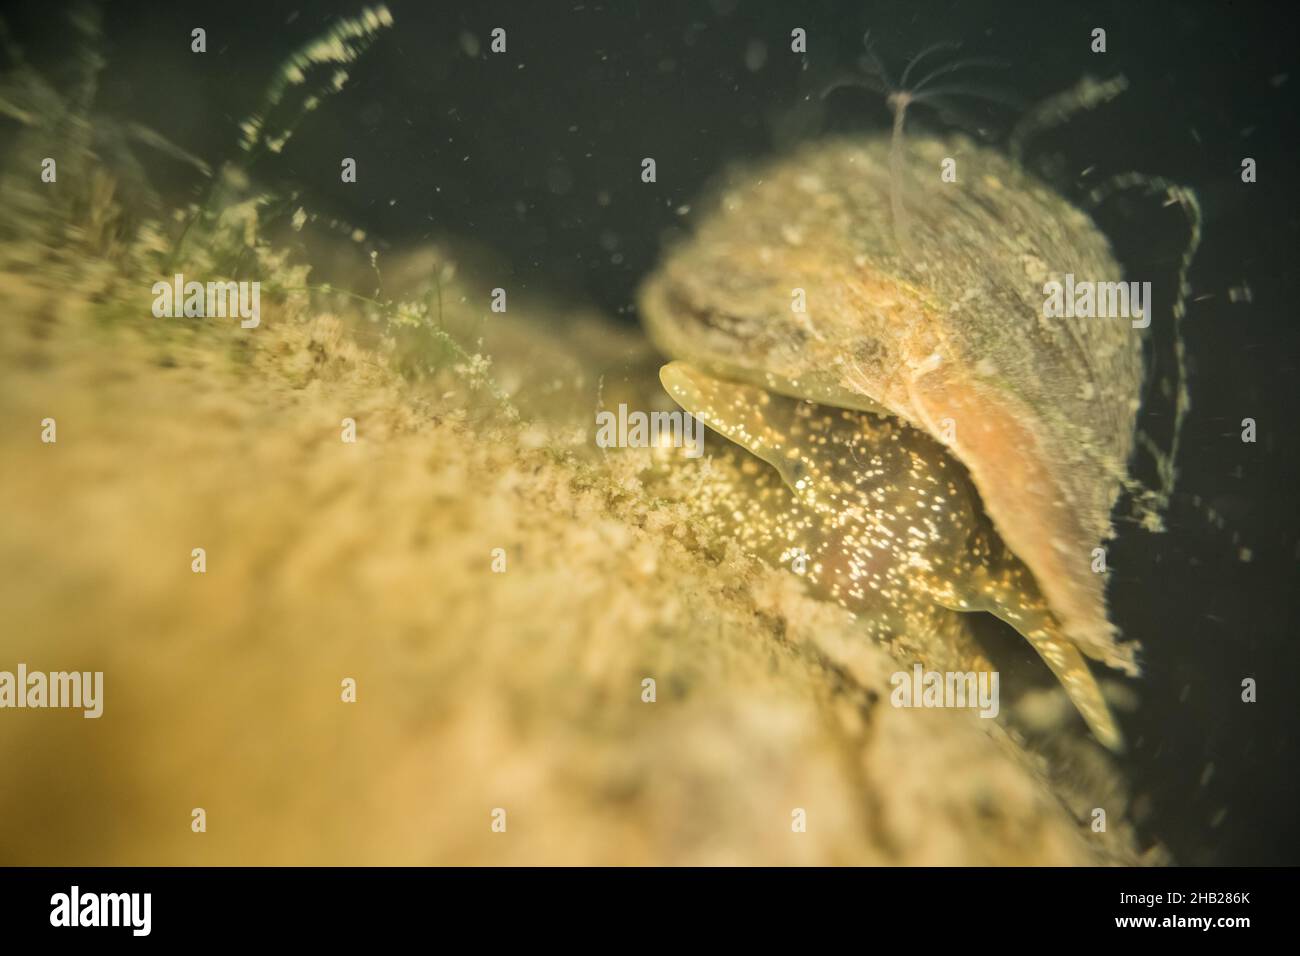 Freshwater pond snail (Radix peregra) Stock Photo